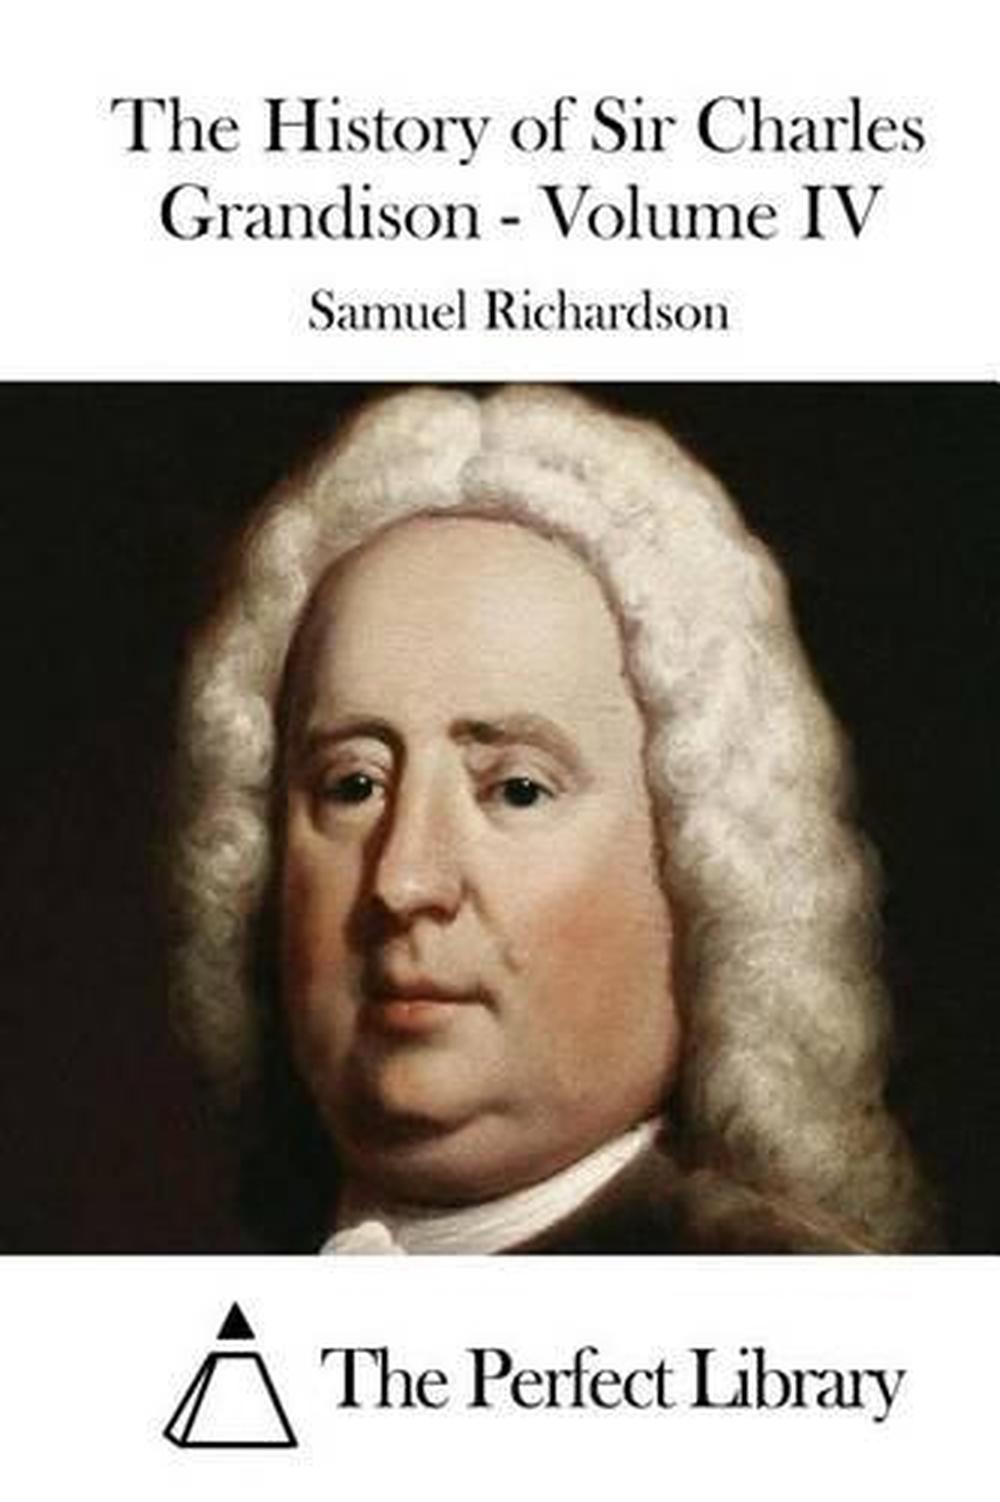 The History of Sir Charles Grandison - Volume IV by Samuel Richardson ...